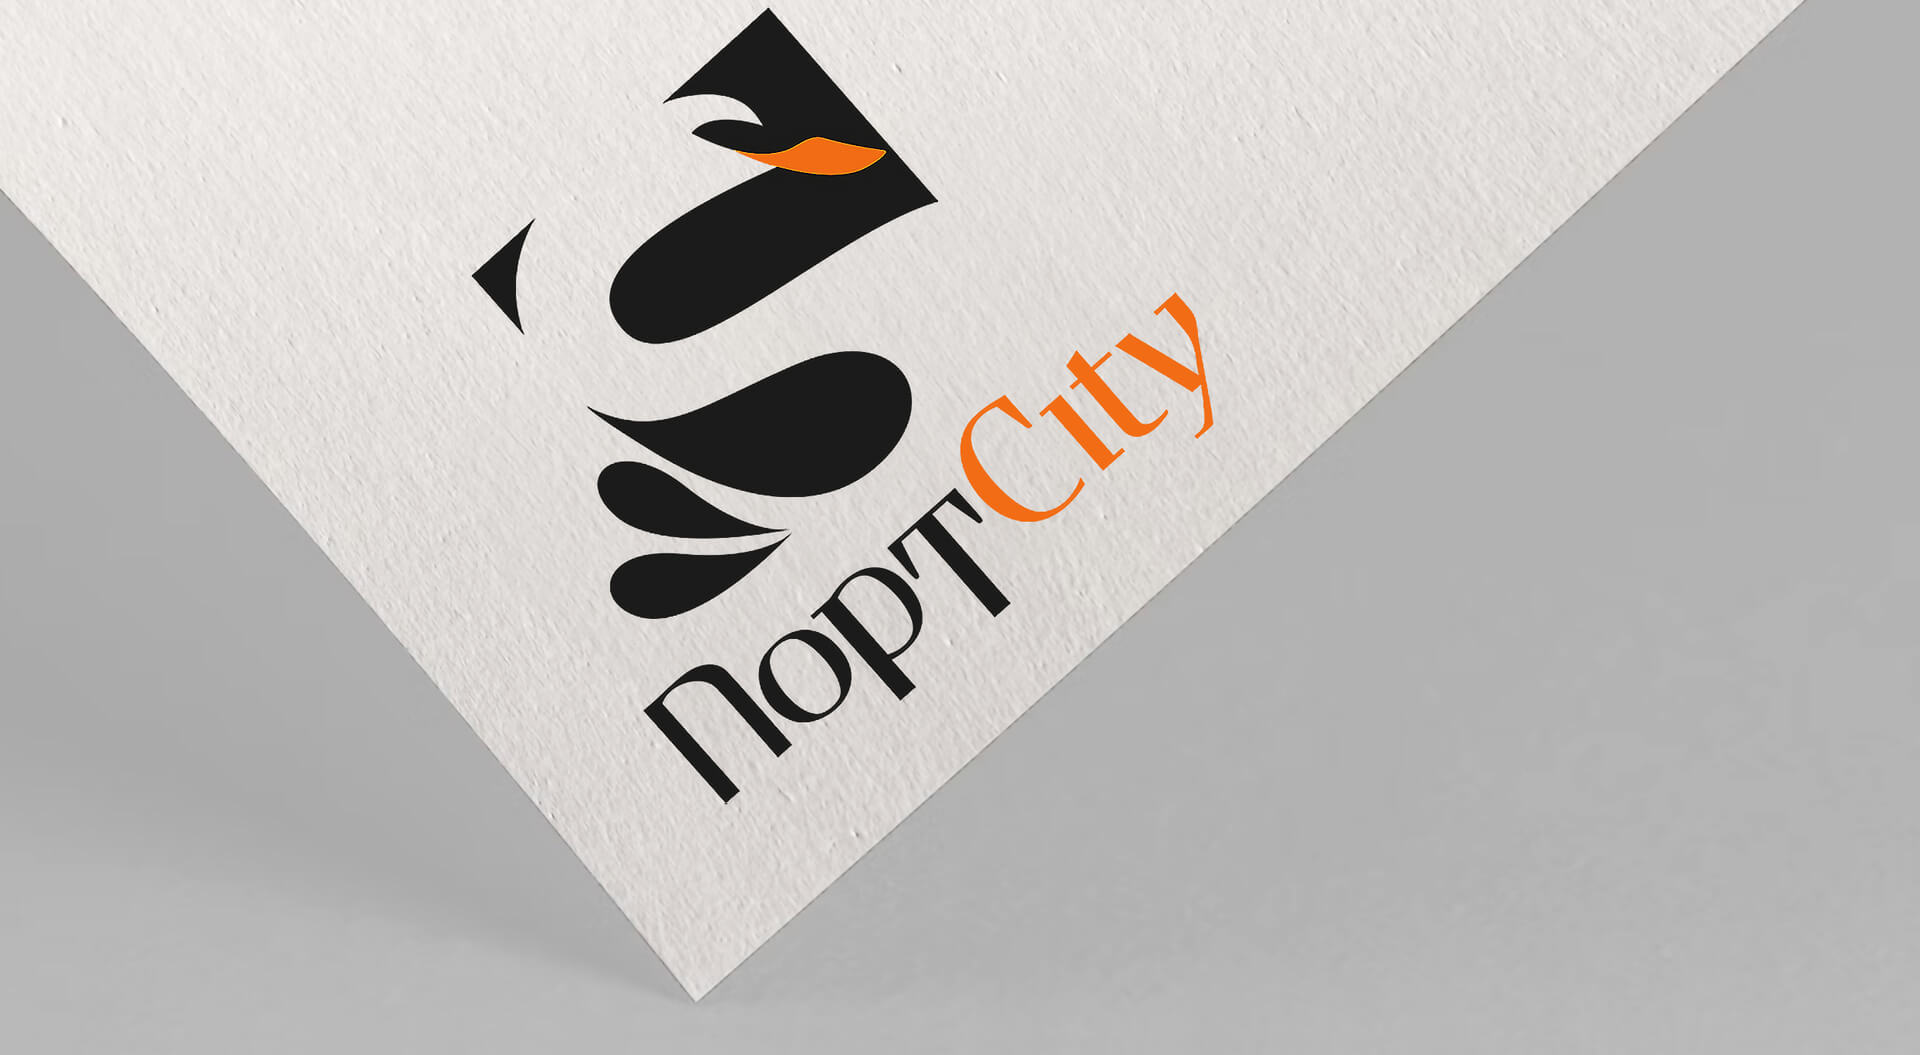 Port City Shopping Mall stationery branding on paper